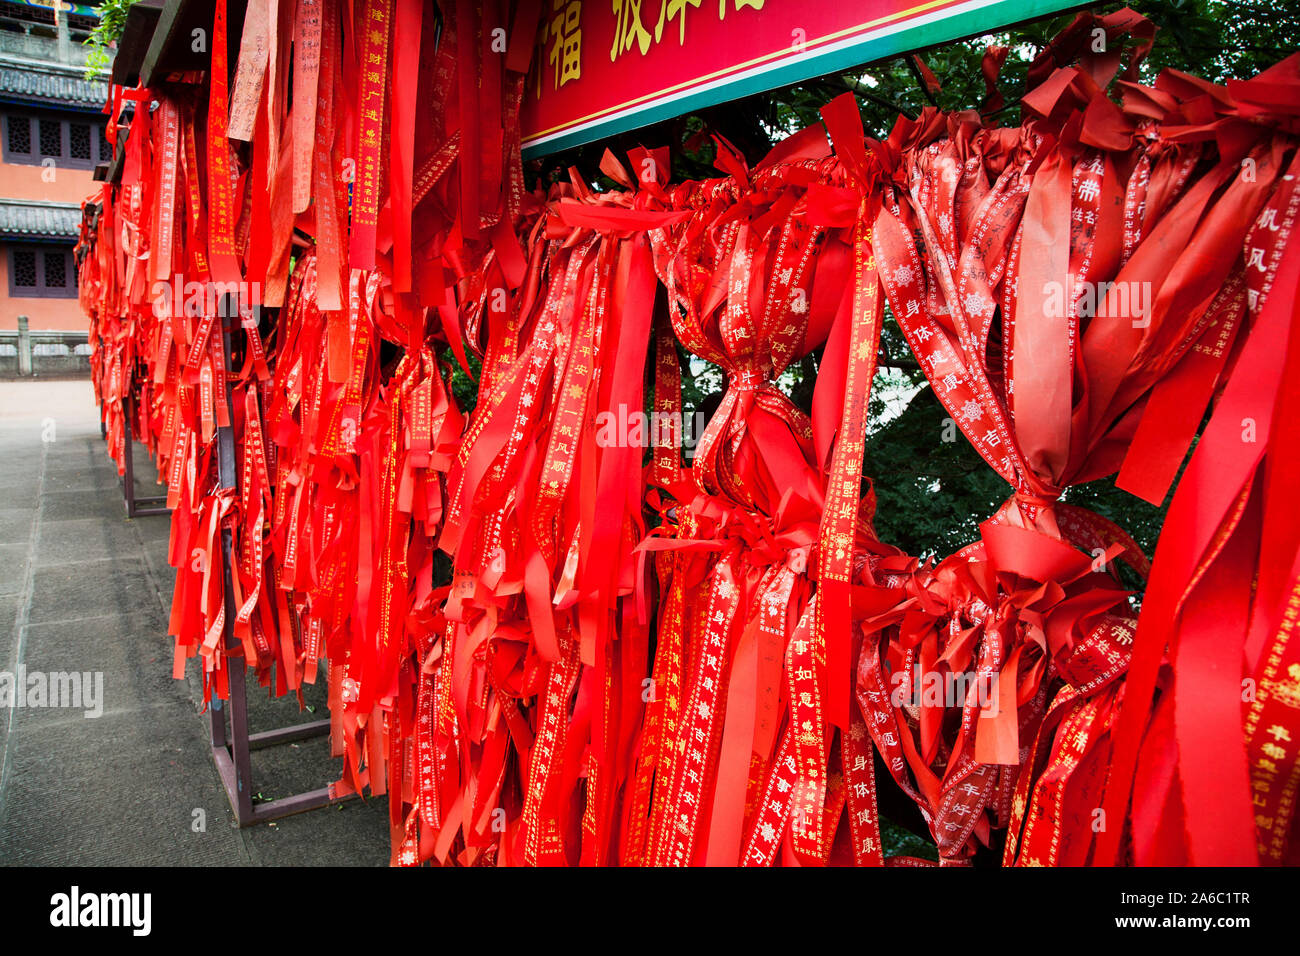 Symbols of prayer, red ribbons unite neighbors separated by virus